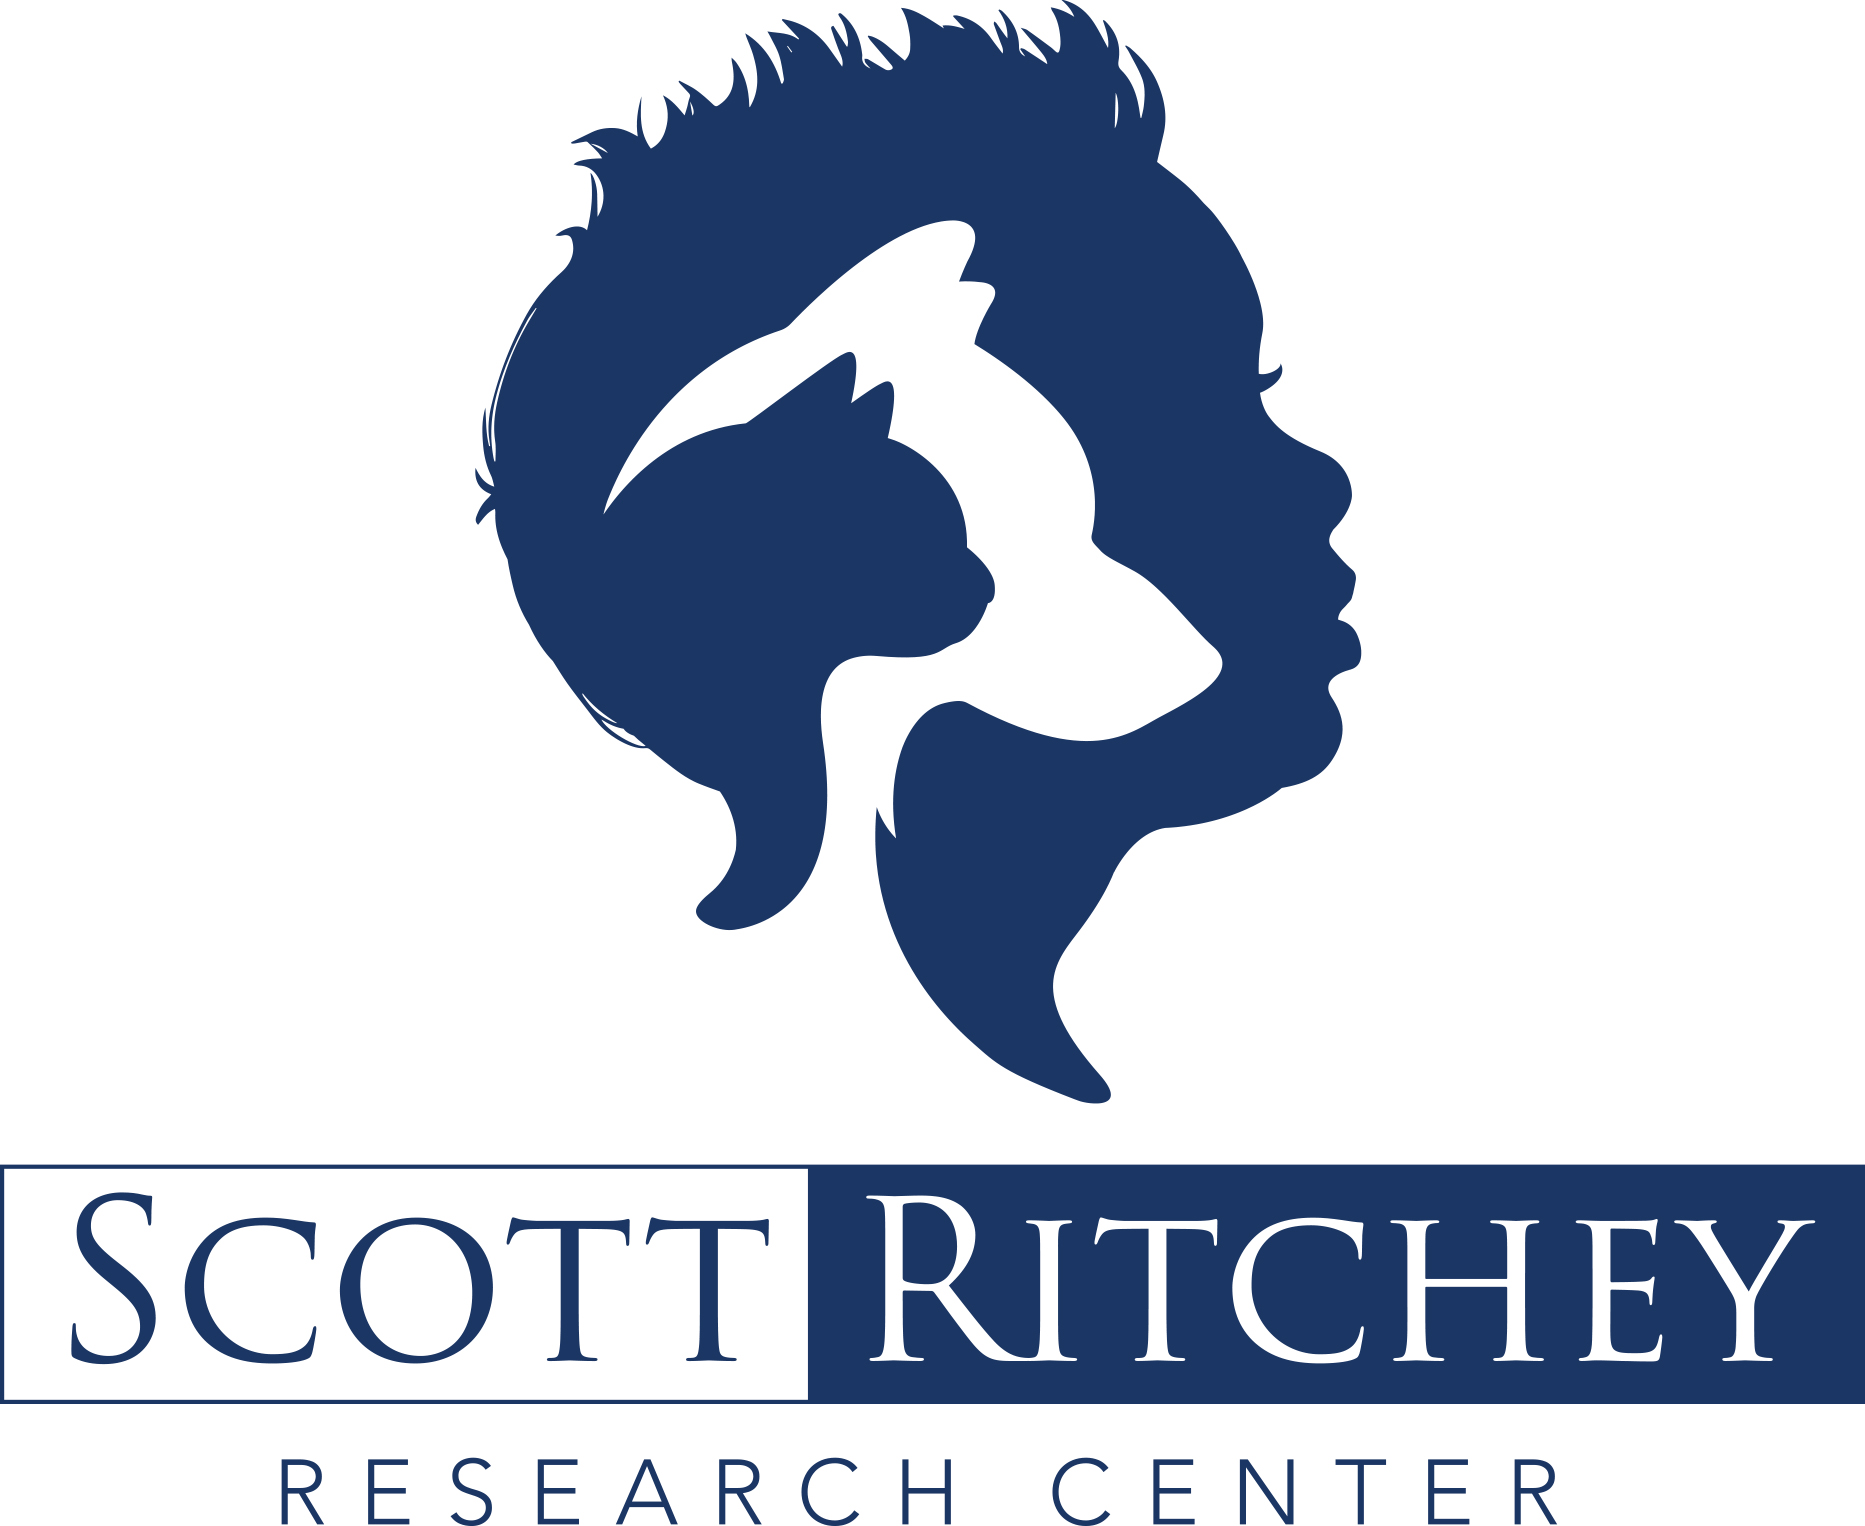 Scott-Ritchey Research Center logo